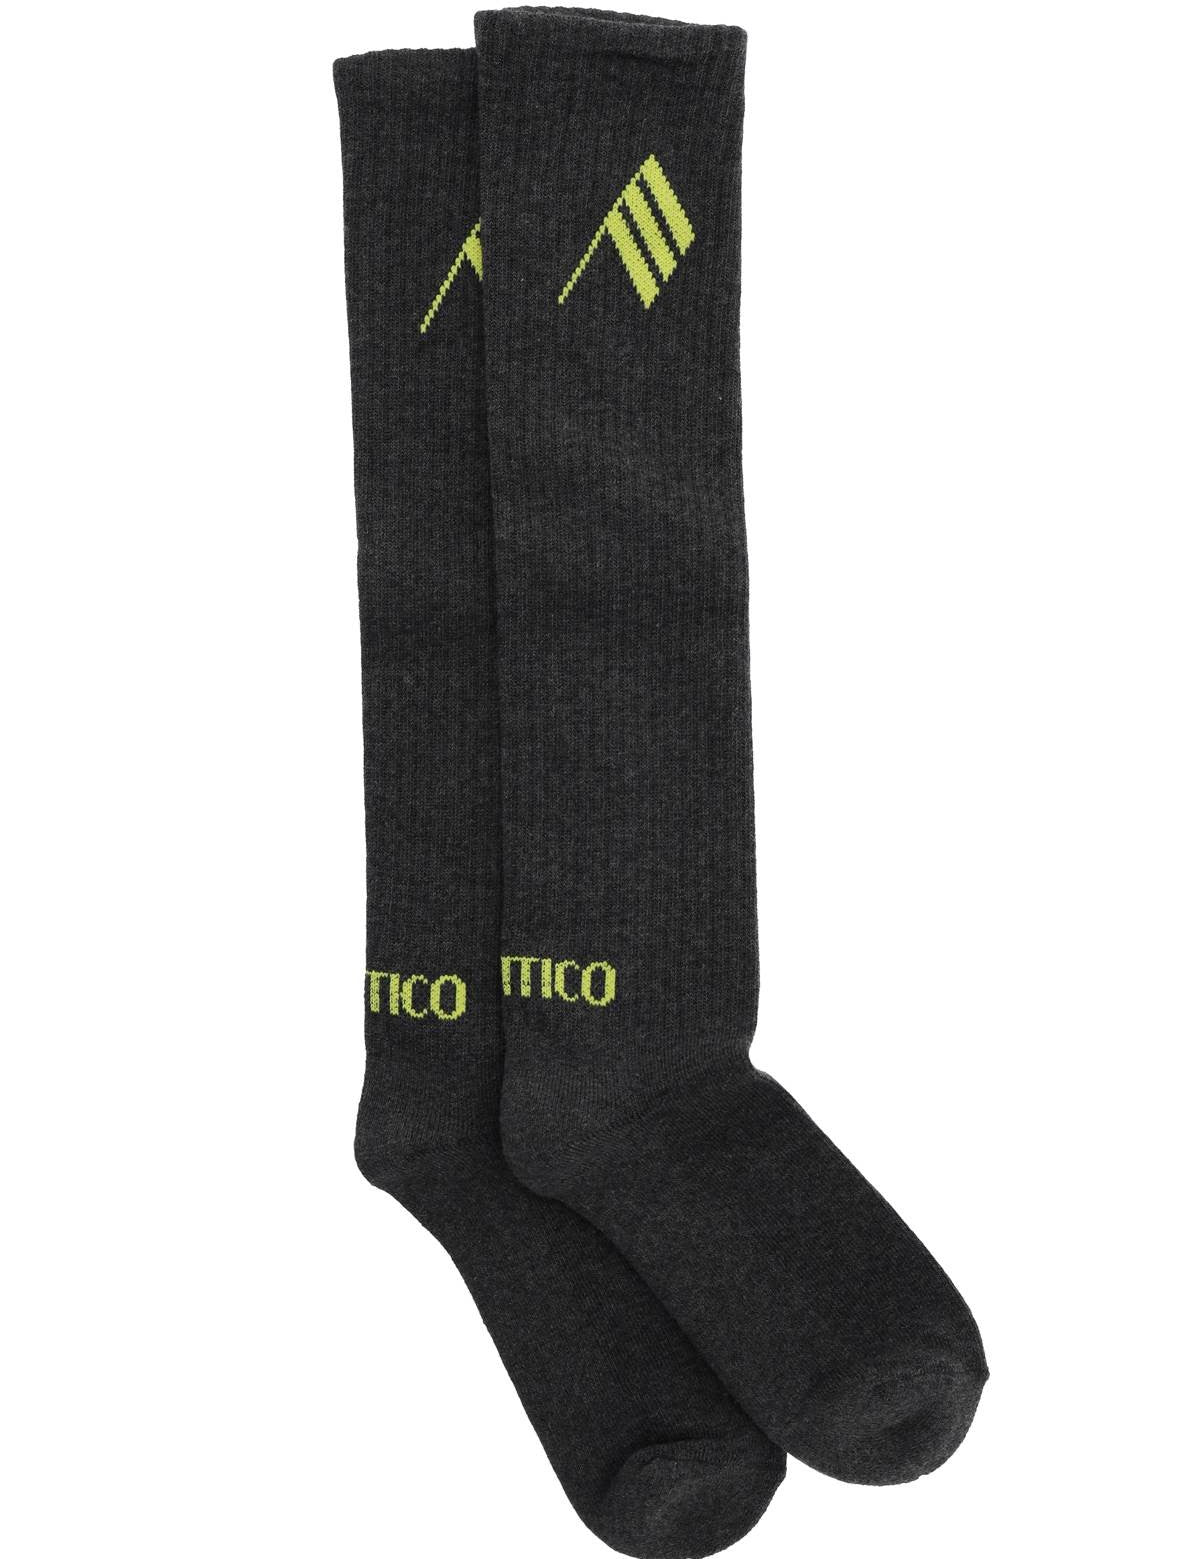 the-attico-logo-short-sports-socks_0e11cbd4-989d-4700-838f-3e93b050ad37.jpg